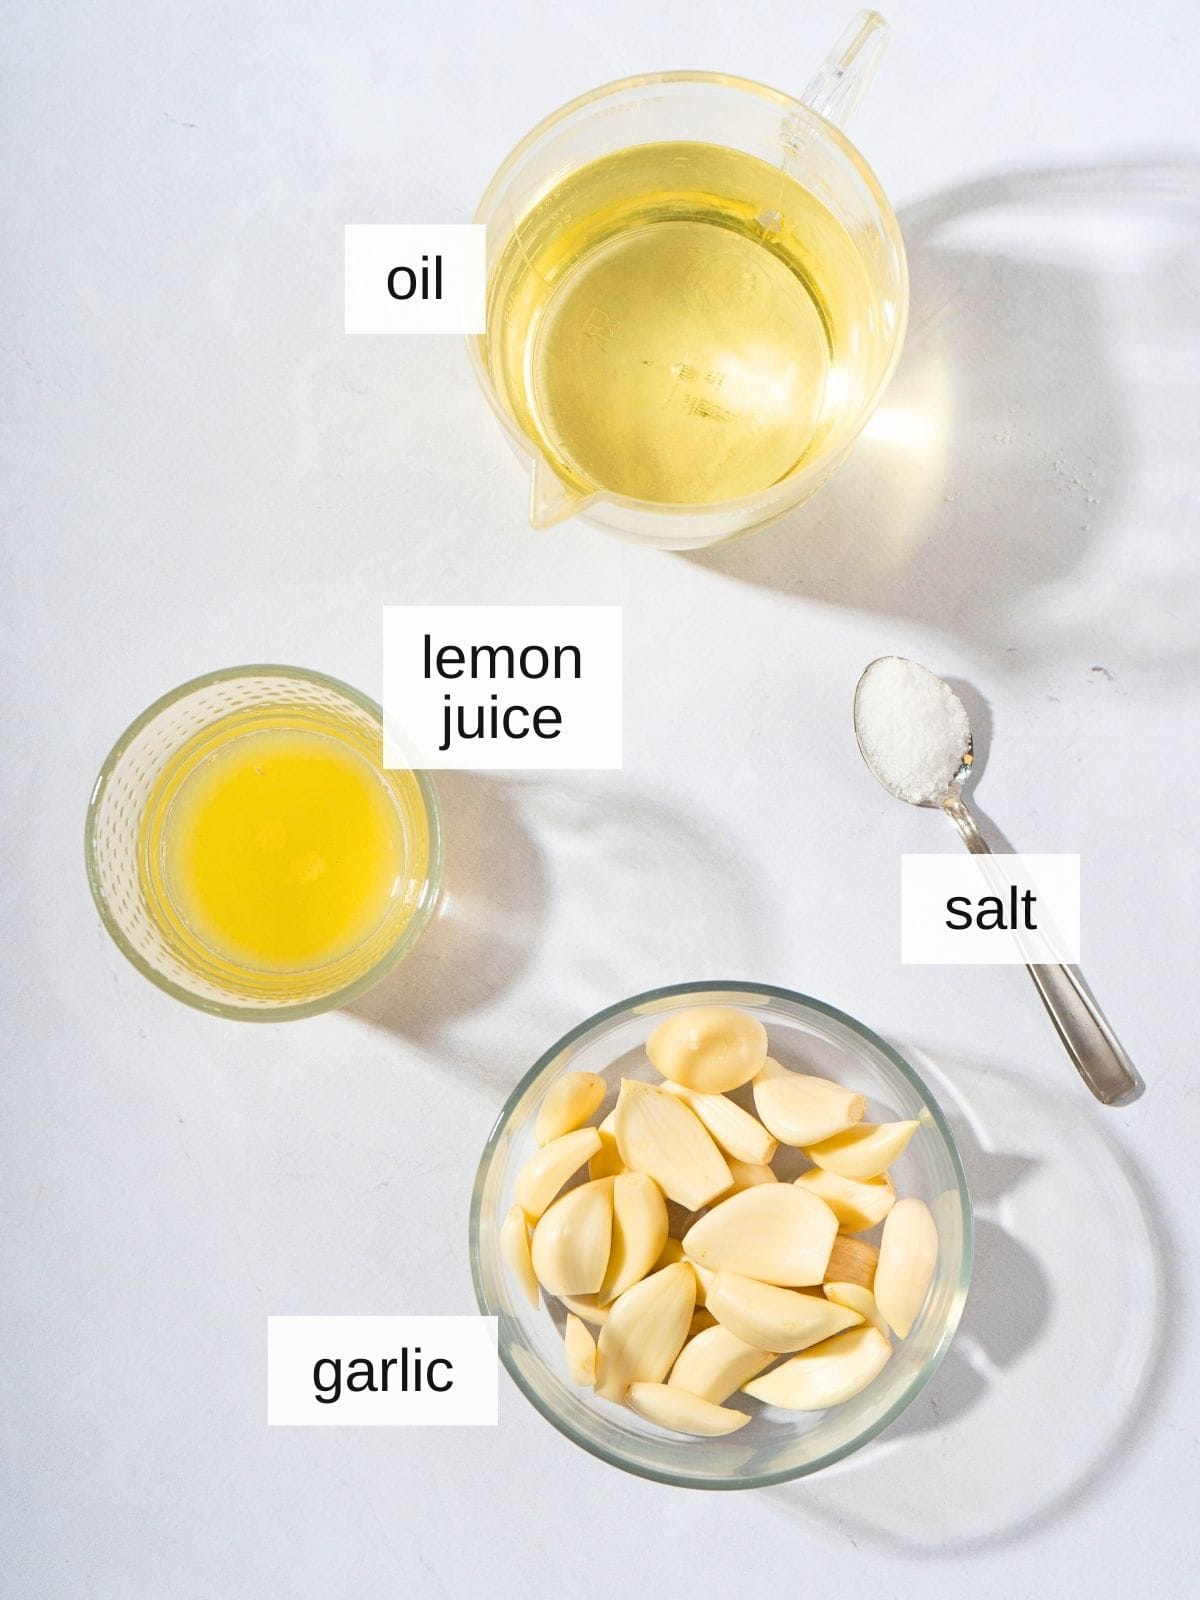 ingredients for toum garlic mayo recipe, including oil, lemon juice, salt, and garlic.